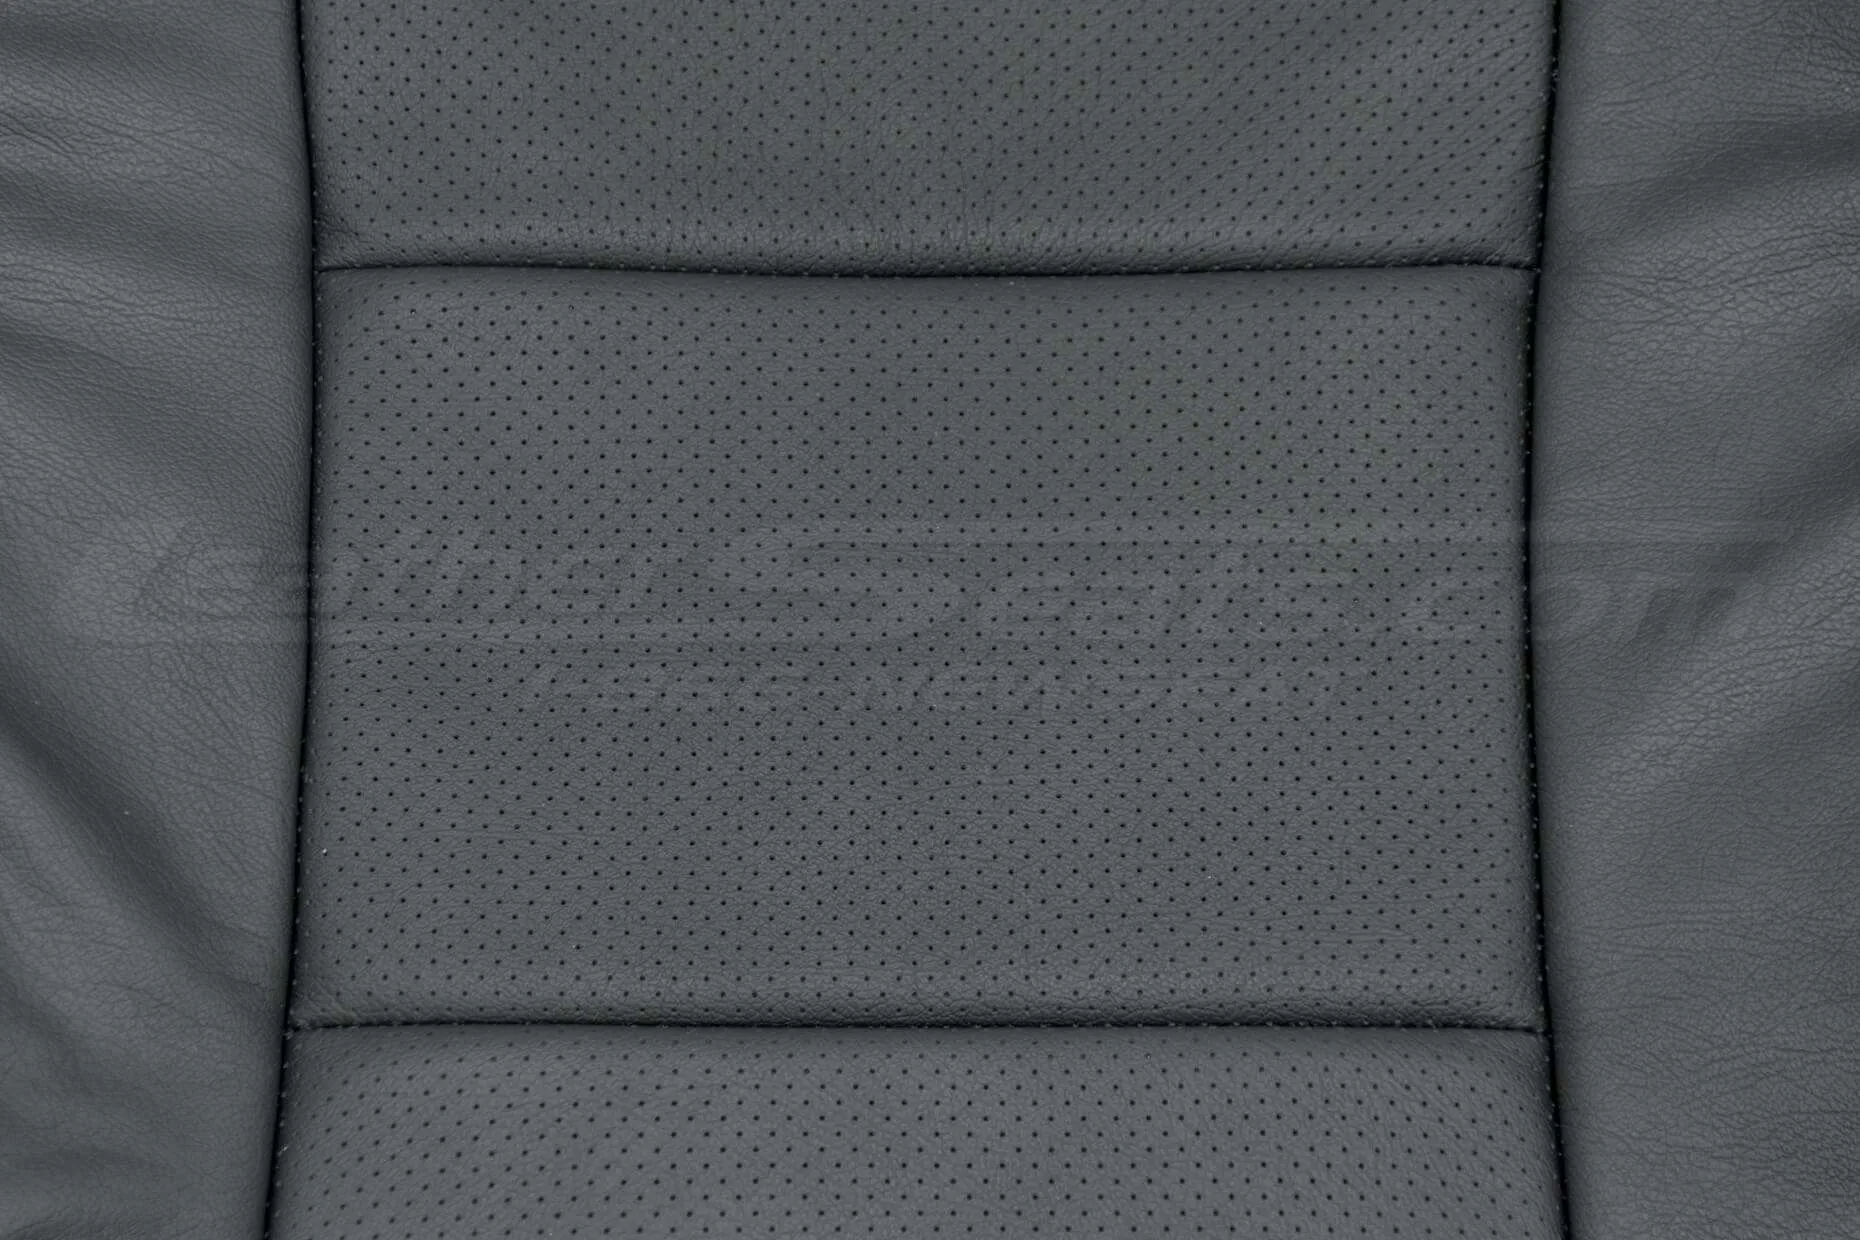 04-06 Acura TL Black Perforation close-up